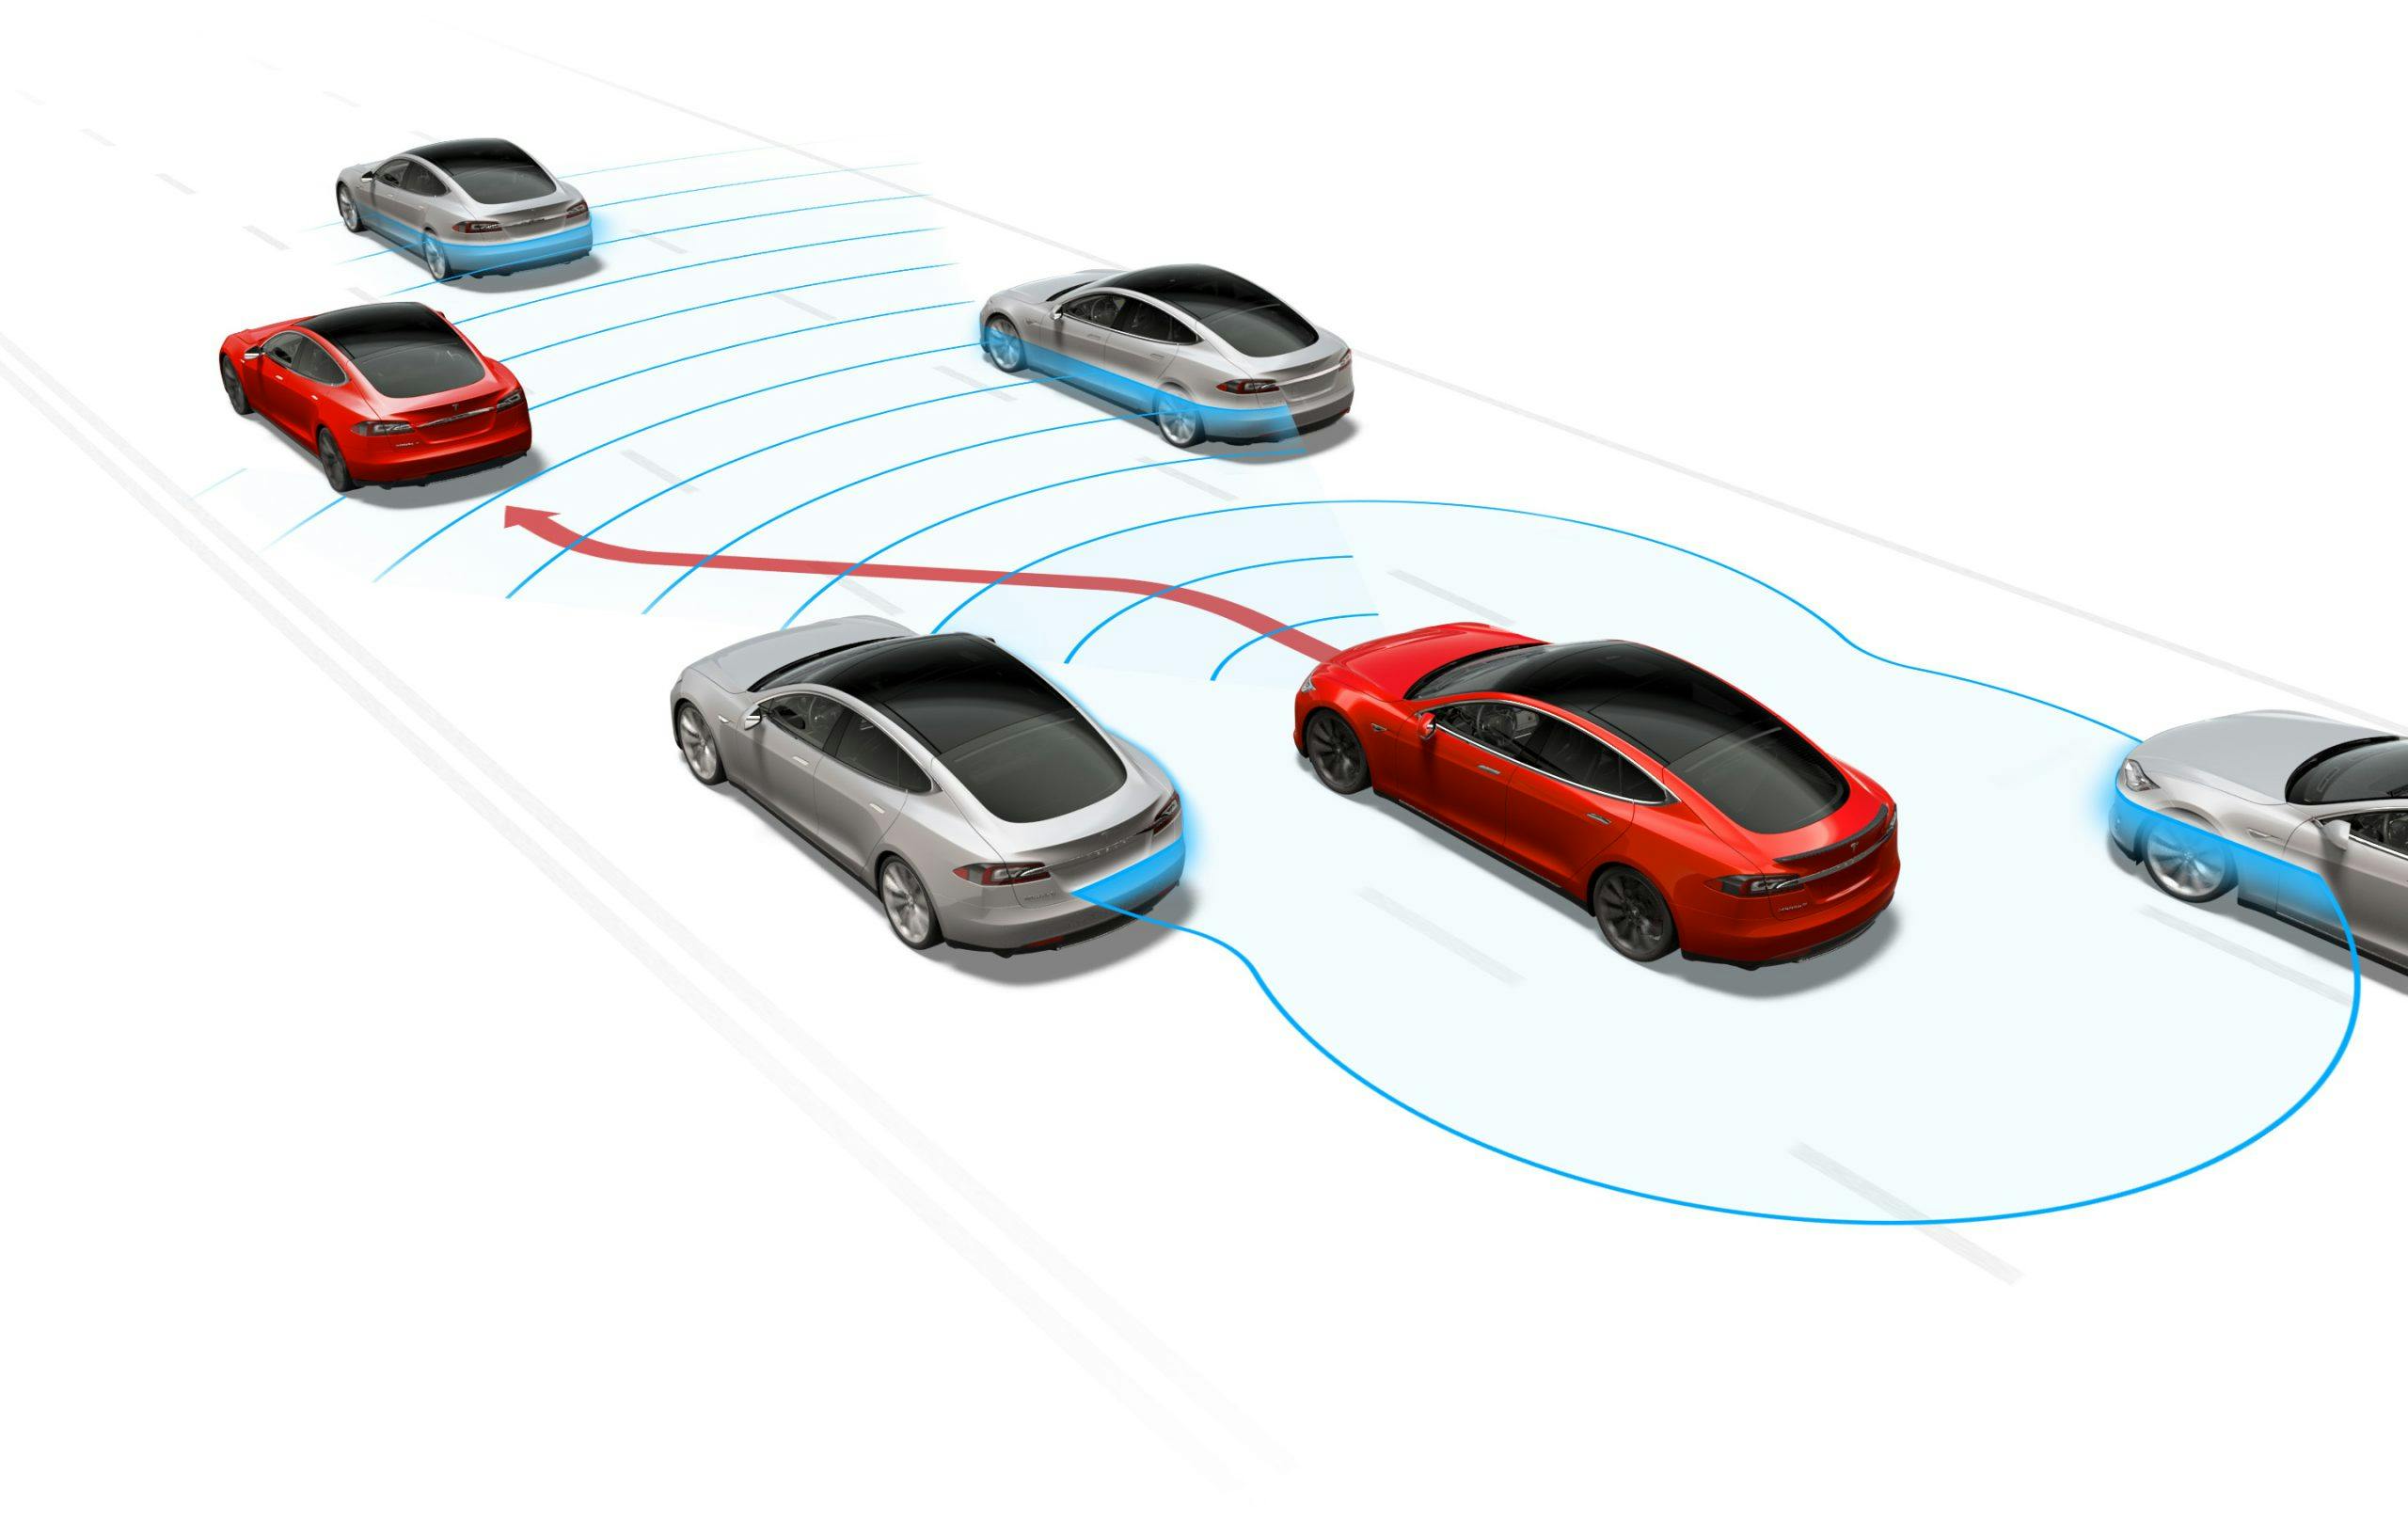 Tesla Autopilit model s graphic